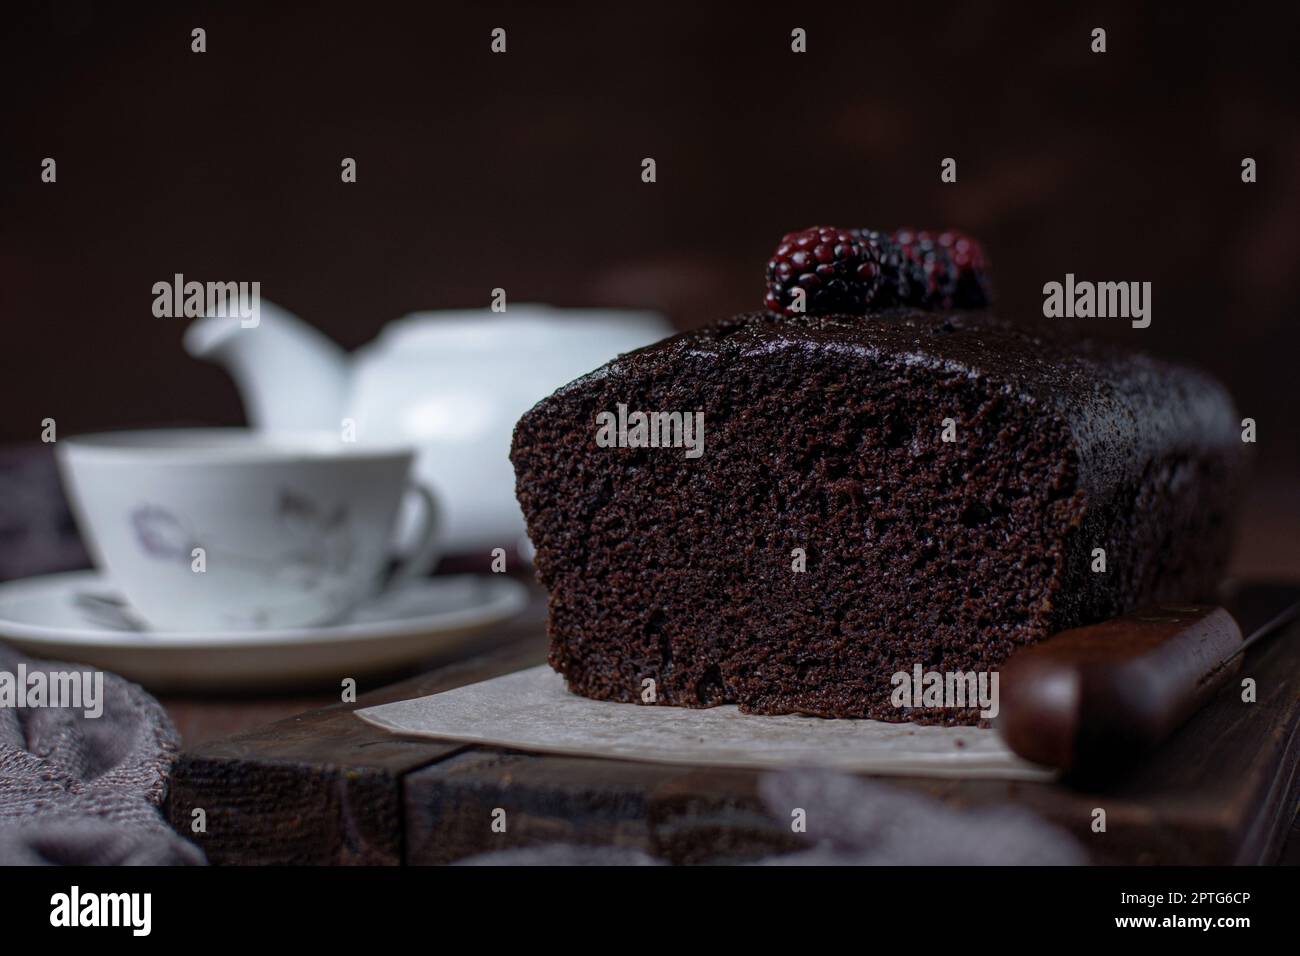 Chocolate cake with coffee Stock Photo